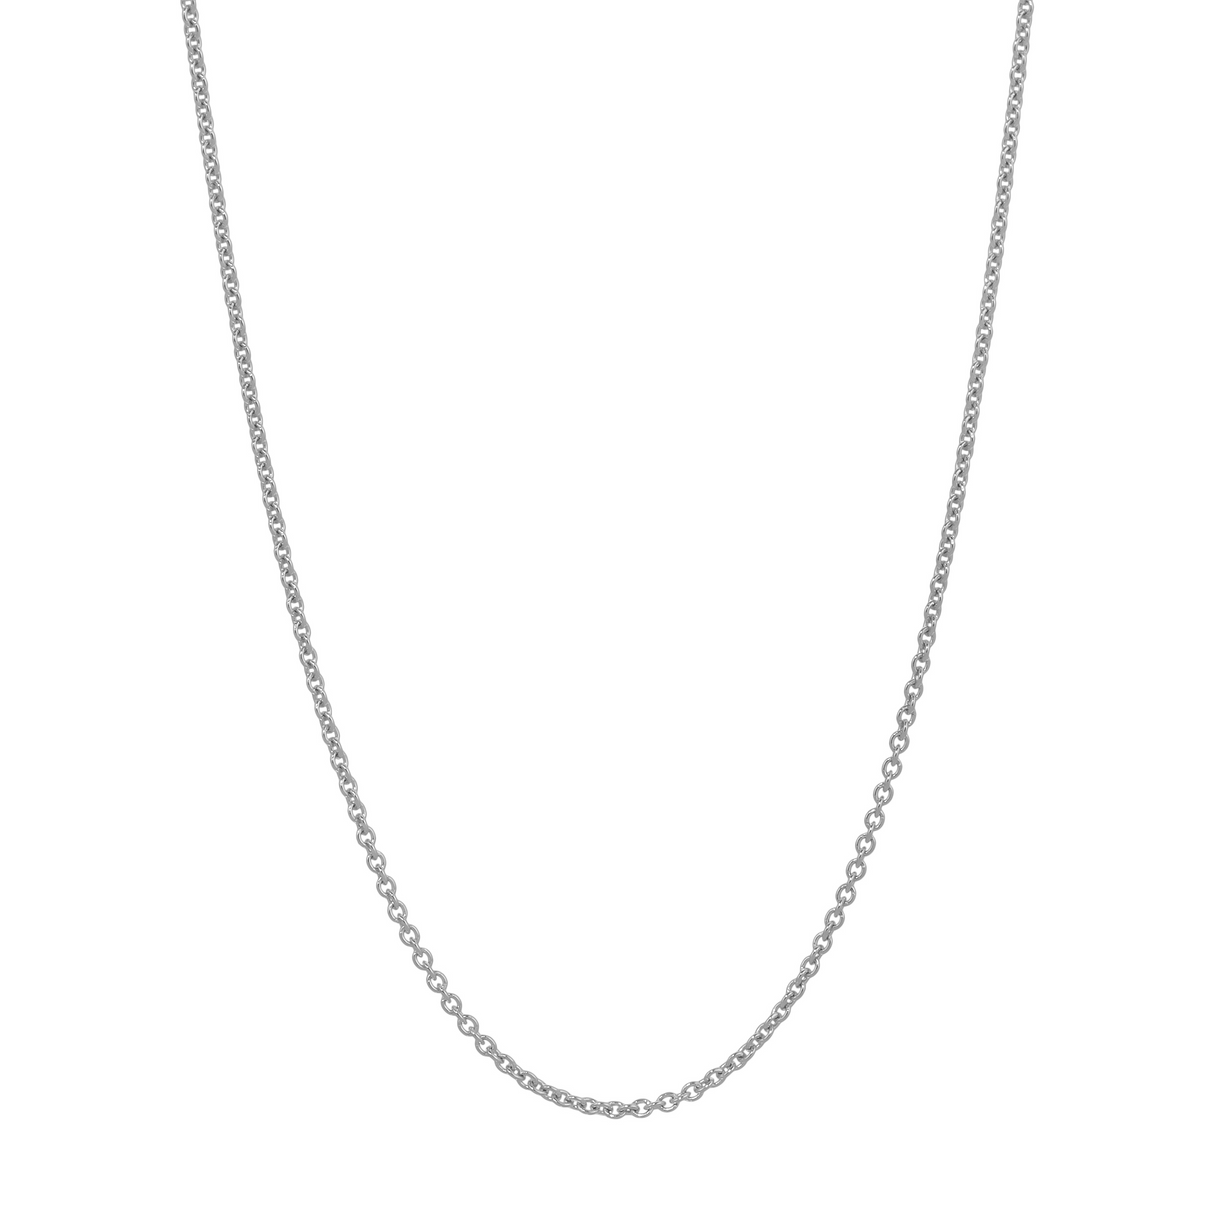 Stylish White Gold Diamond Cut Rolo Chain Necklaces | Italian Fashions 